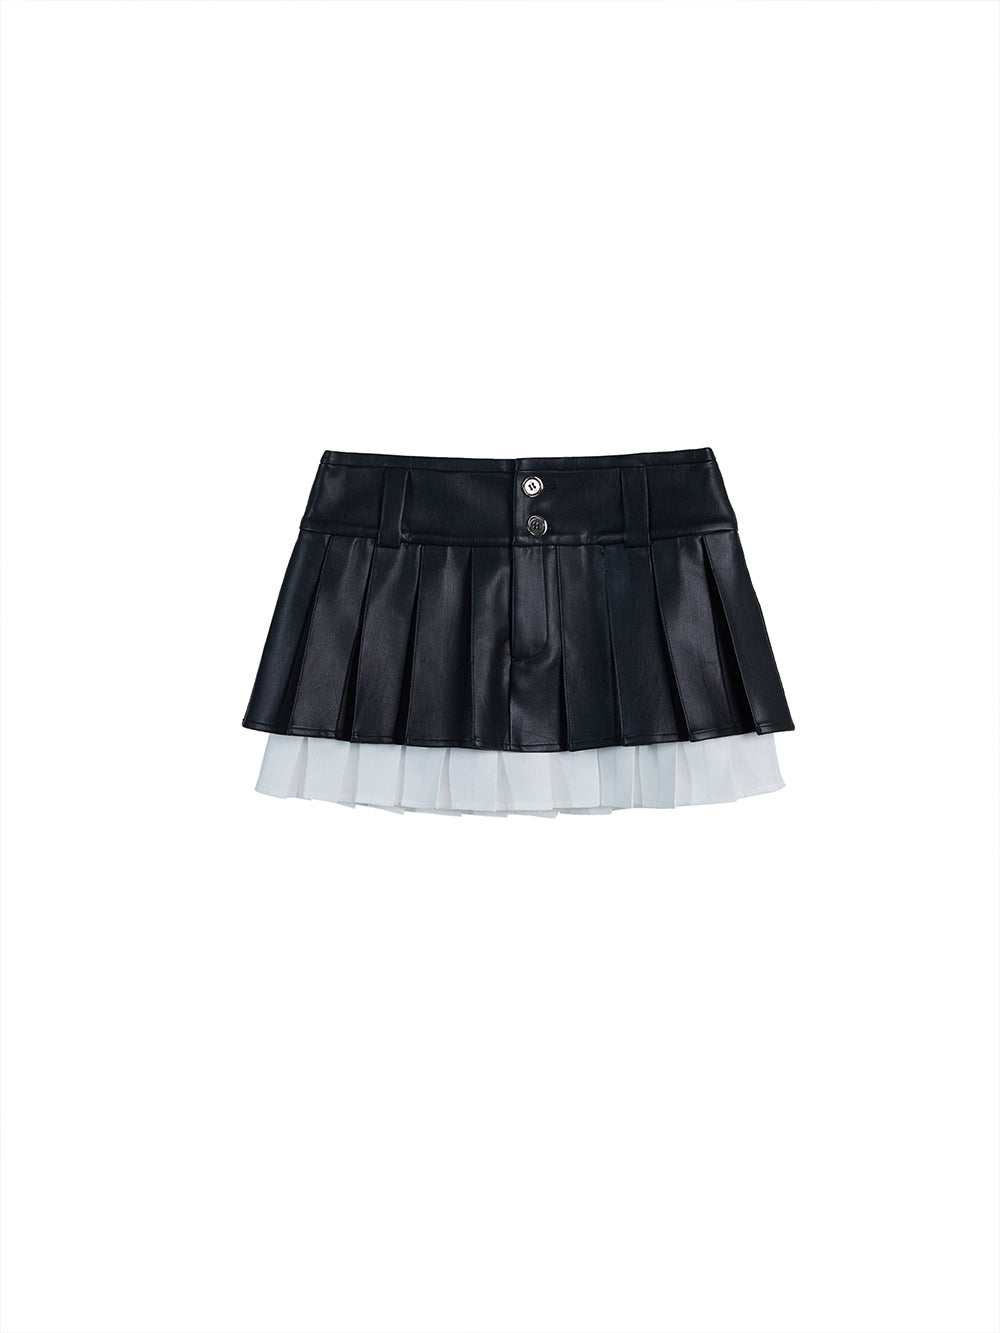 MUKTANK X MODULER Double Layer Designed Skirt